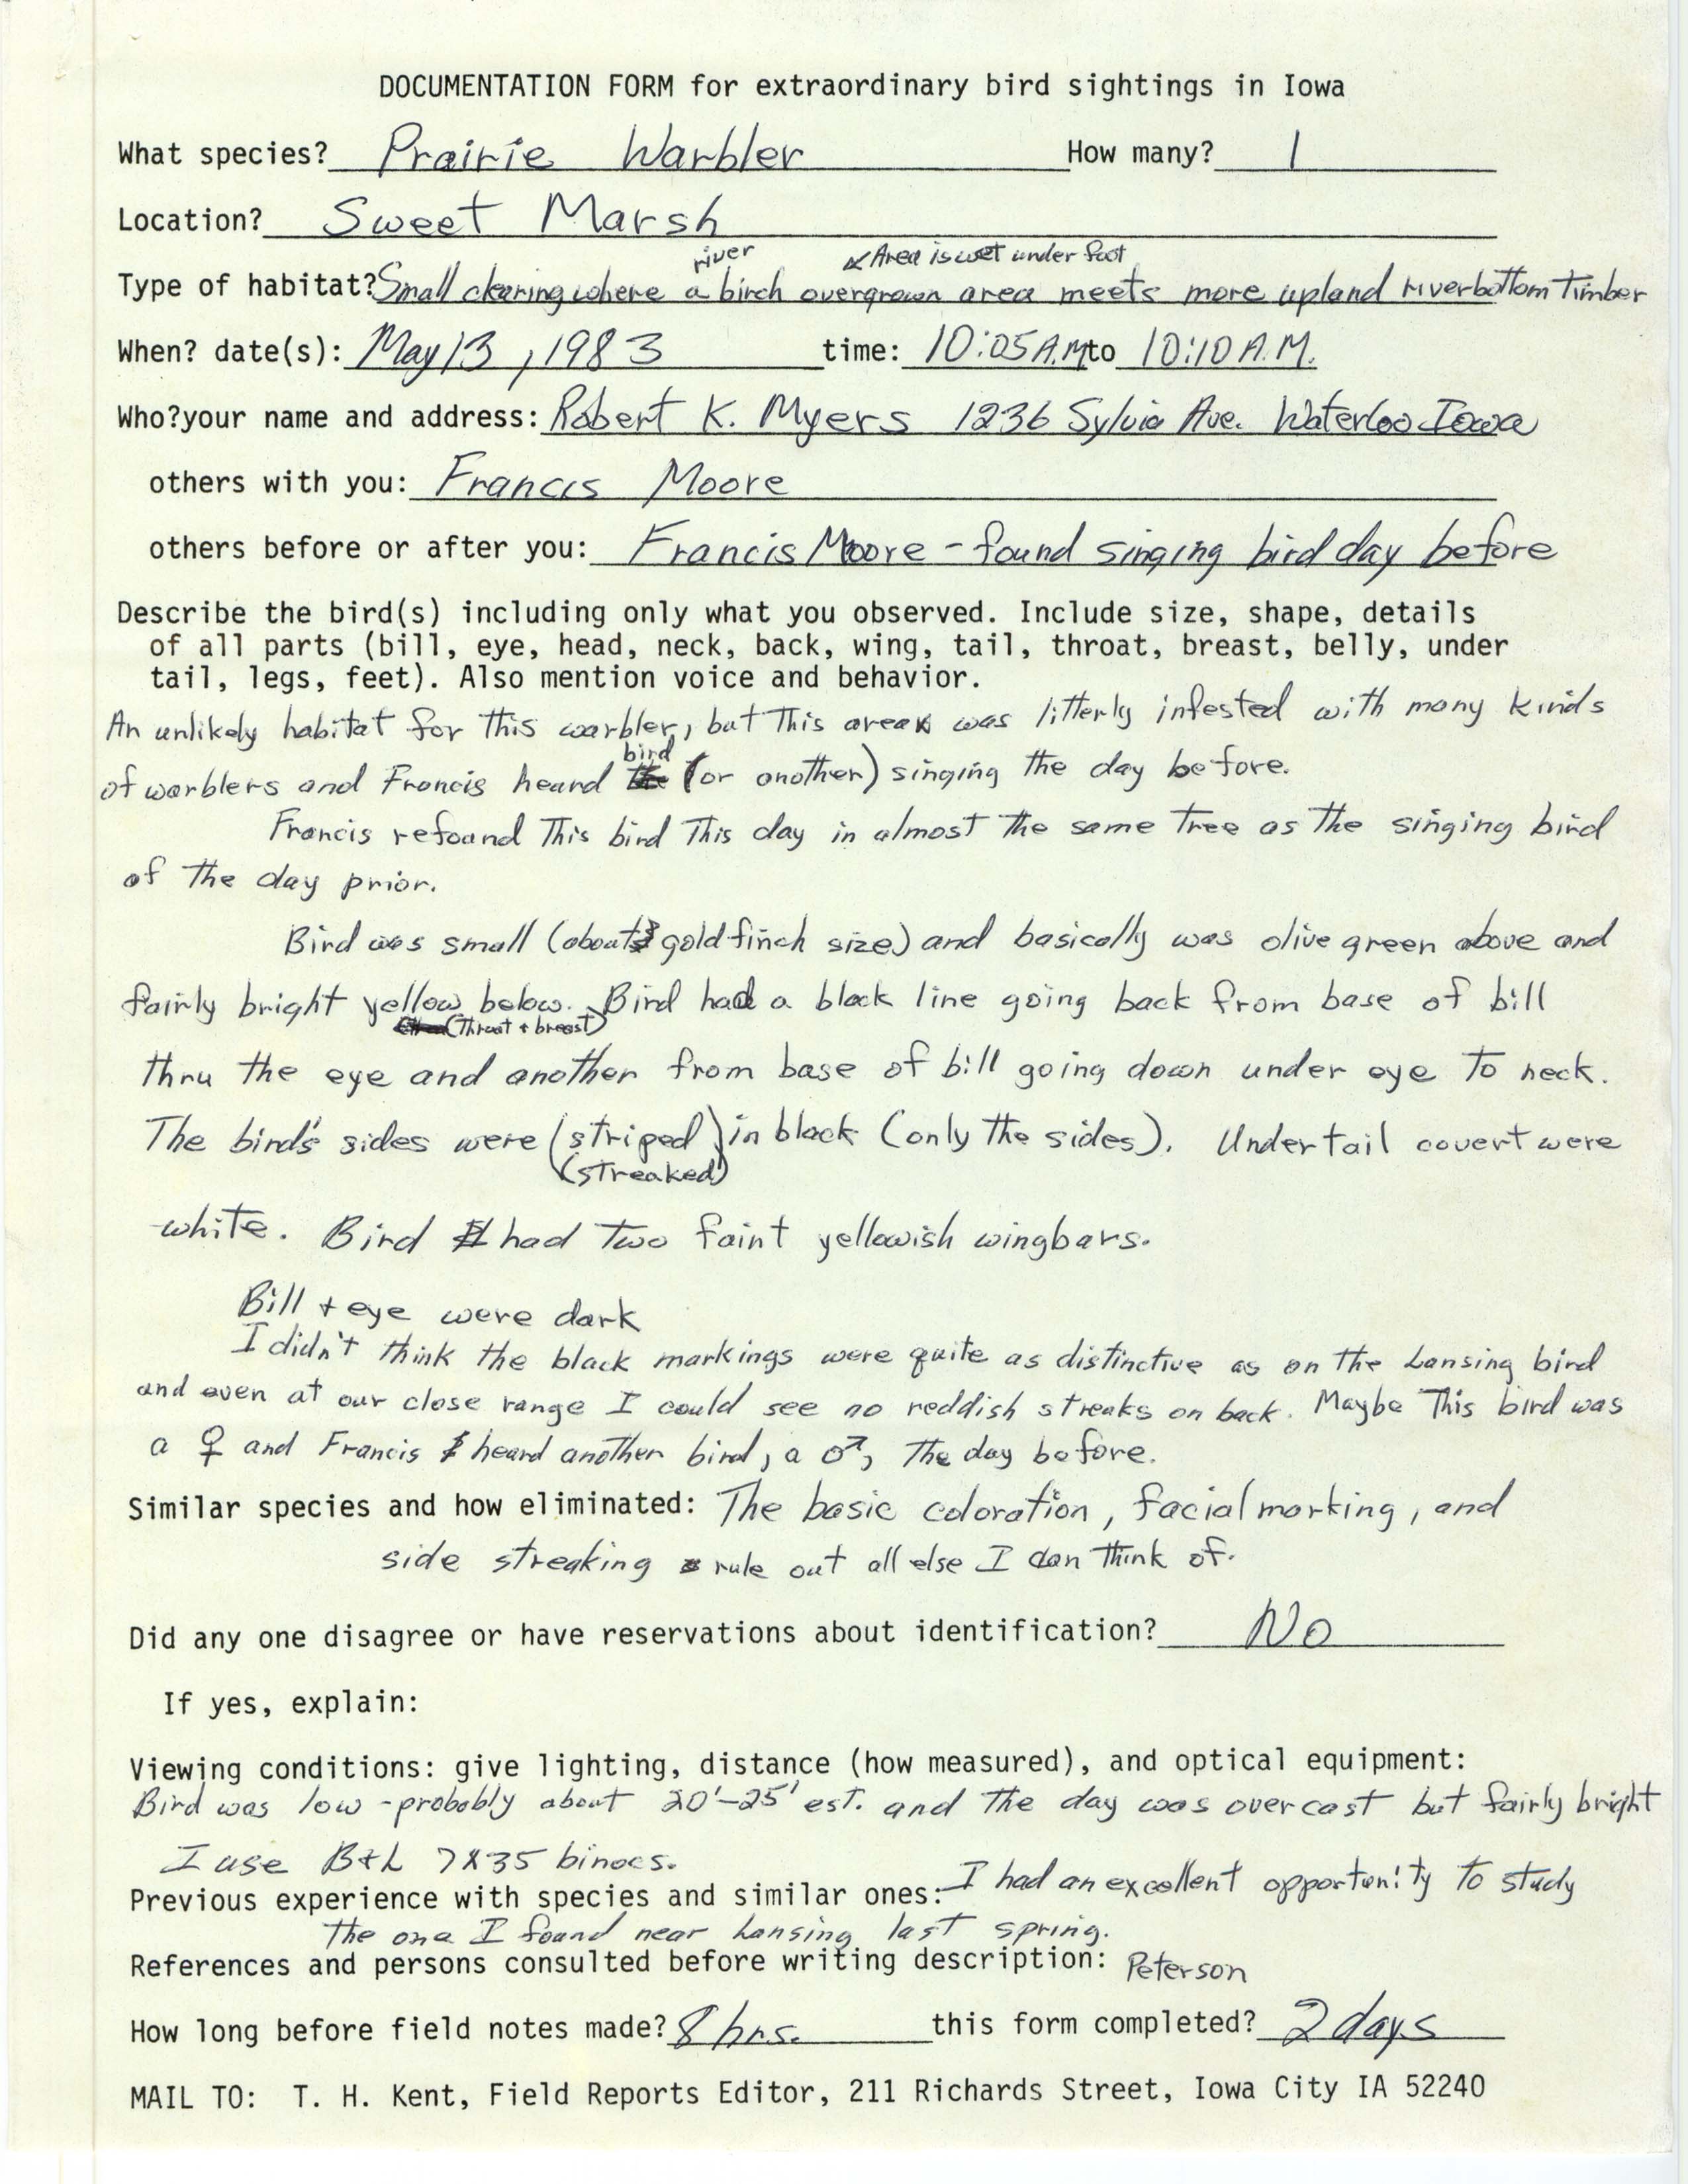 Rare bird documentation form for Prairie Warbler at Sweet Marsh, 1983